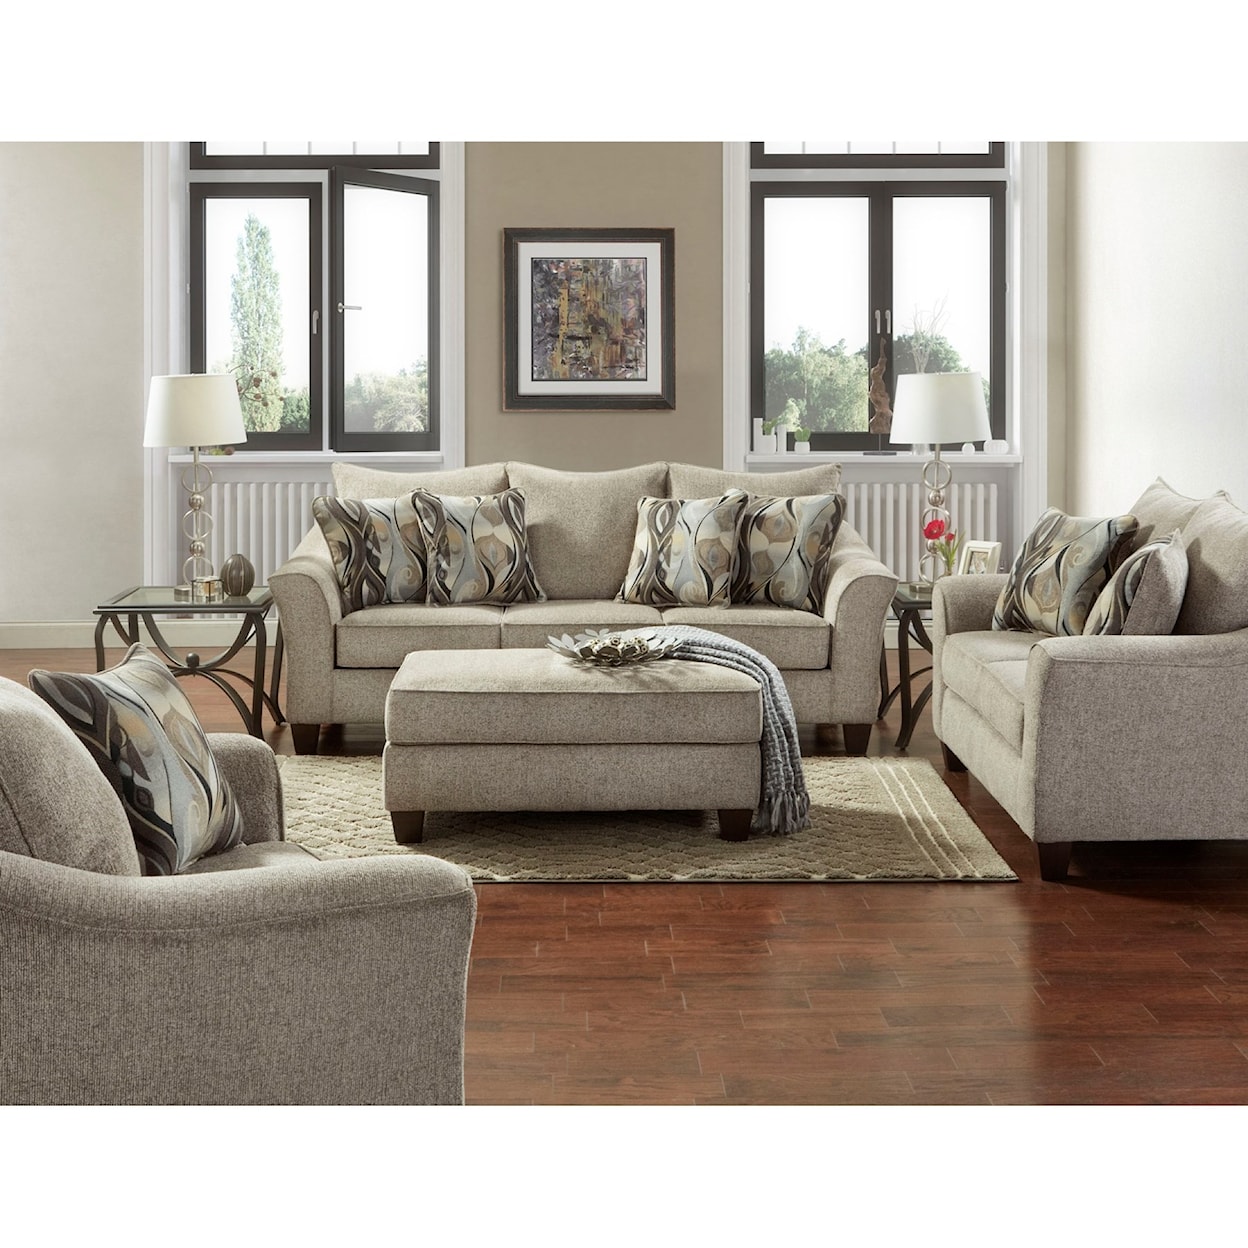 Affordable Furniture 7700 Loveseat